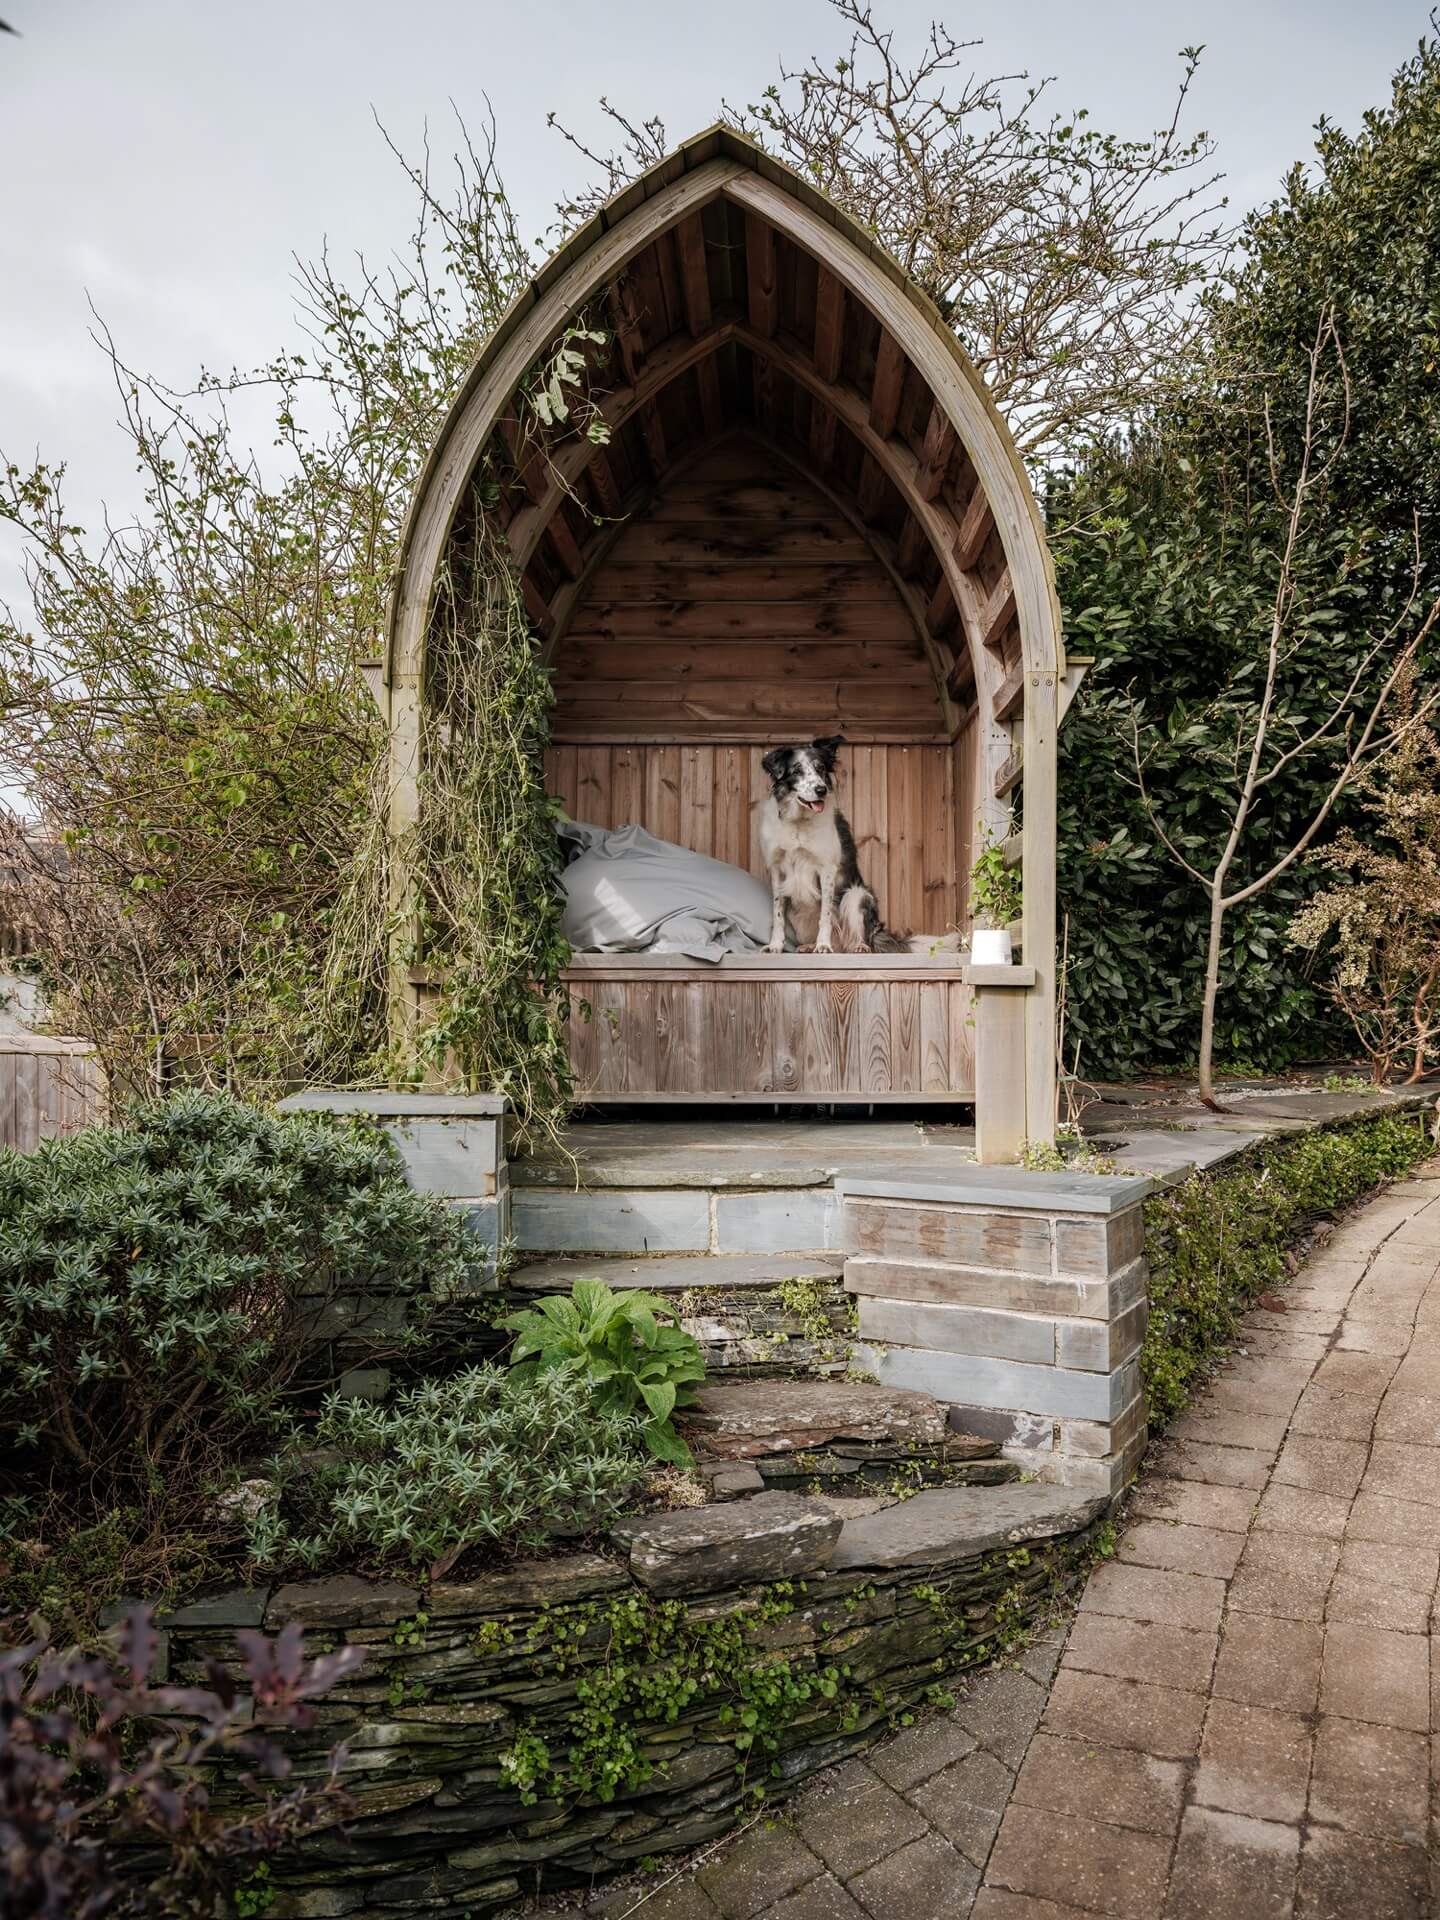 artist Sarah Adams Padstow home - her dog in the garden